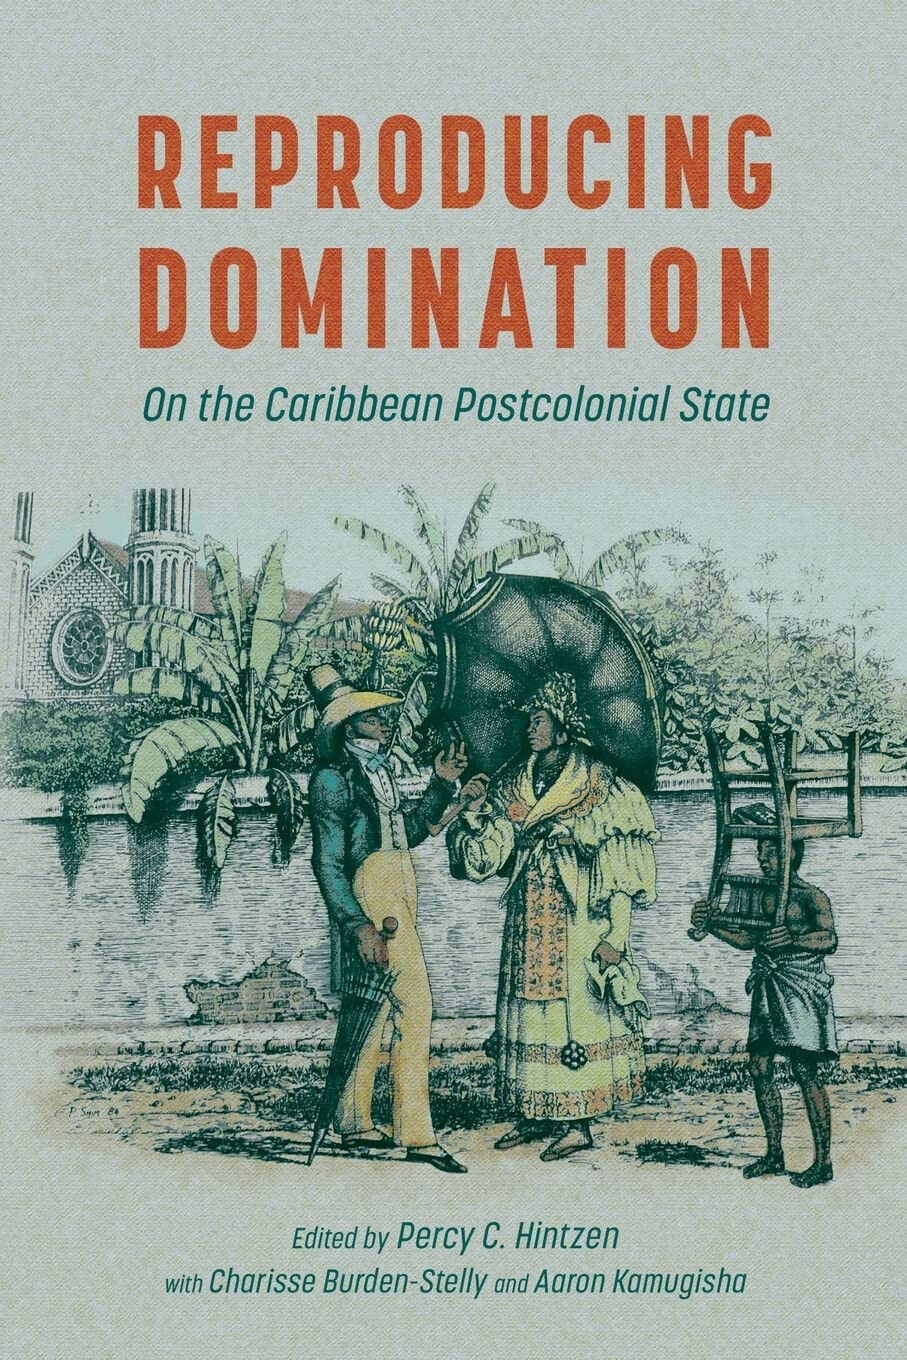 Reproducing Domination - Percy C. Hintzen - University Press Of Mississippi,2022 libro usato